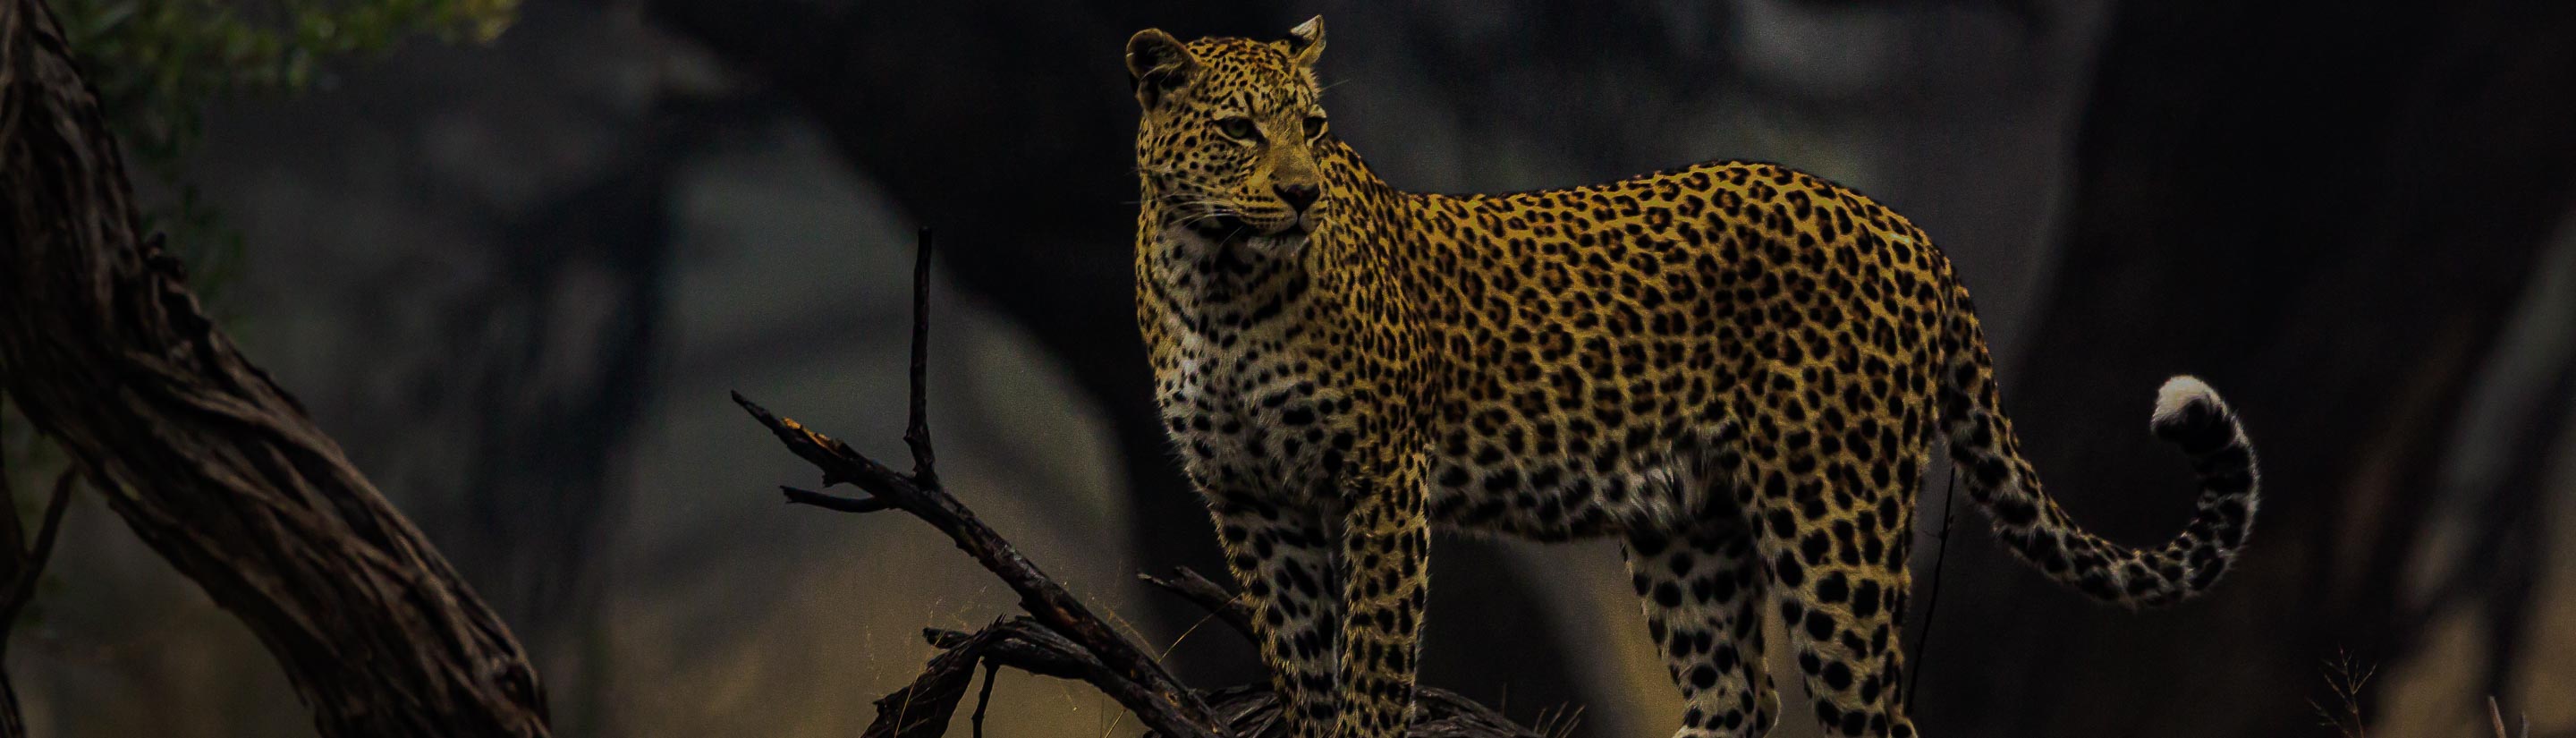 Sambia Reise Leopard